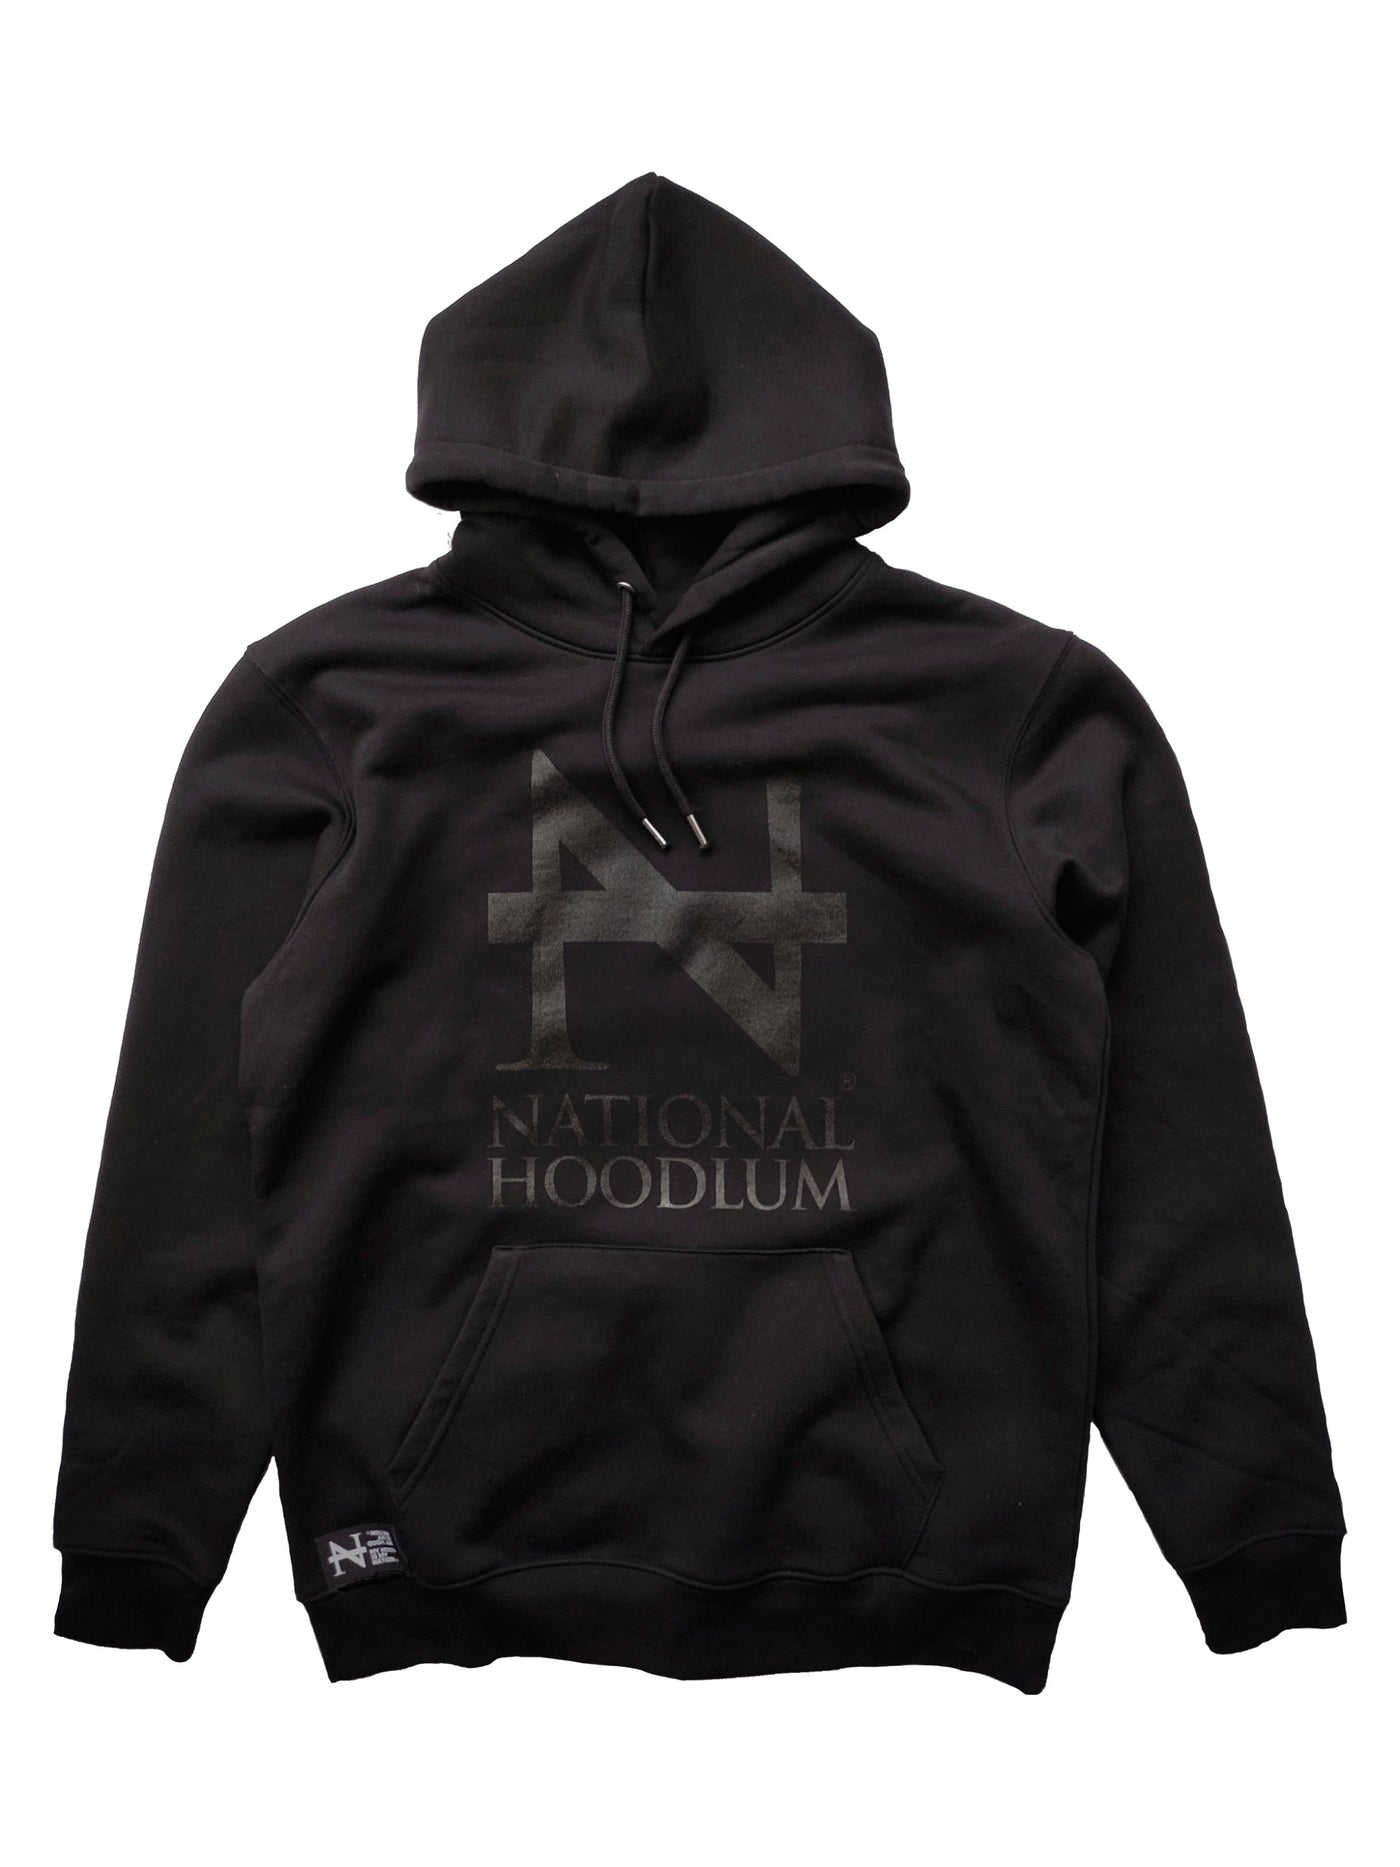 "Foundation Logo" Hooded Sweatshirt black (heavyweight 350gsm)